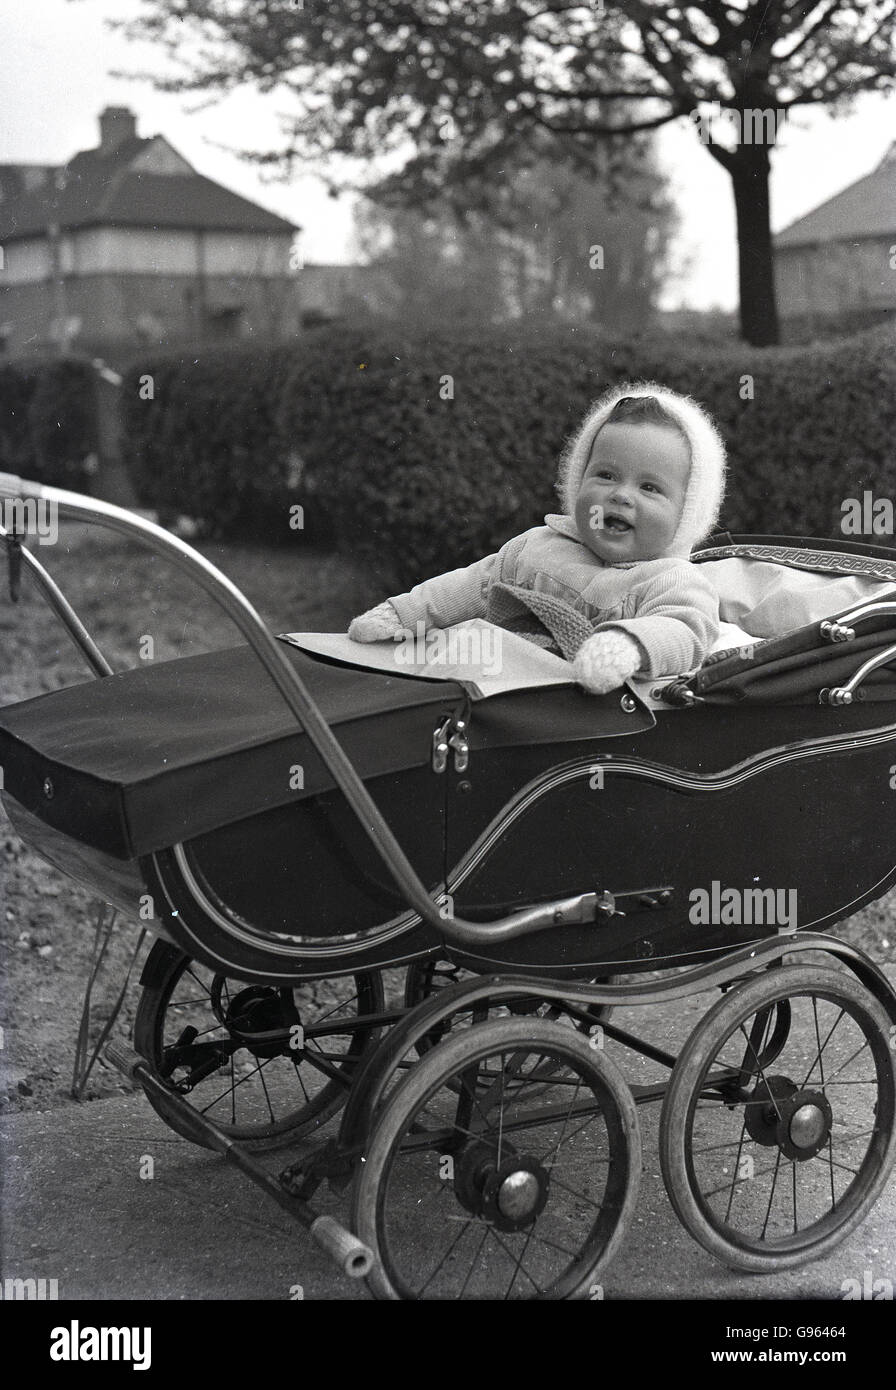 1950 baby buggy